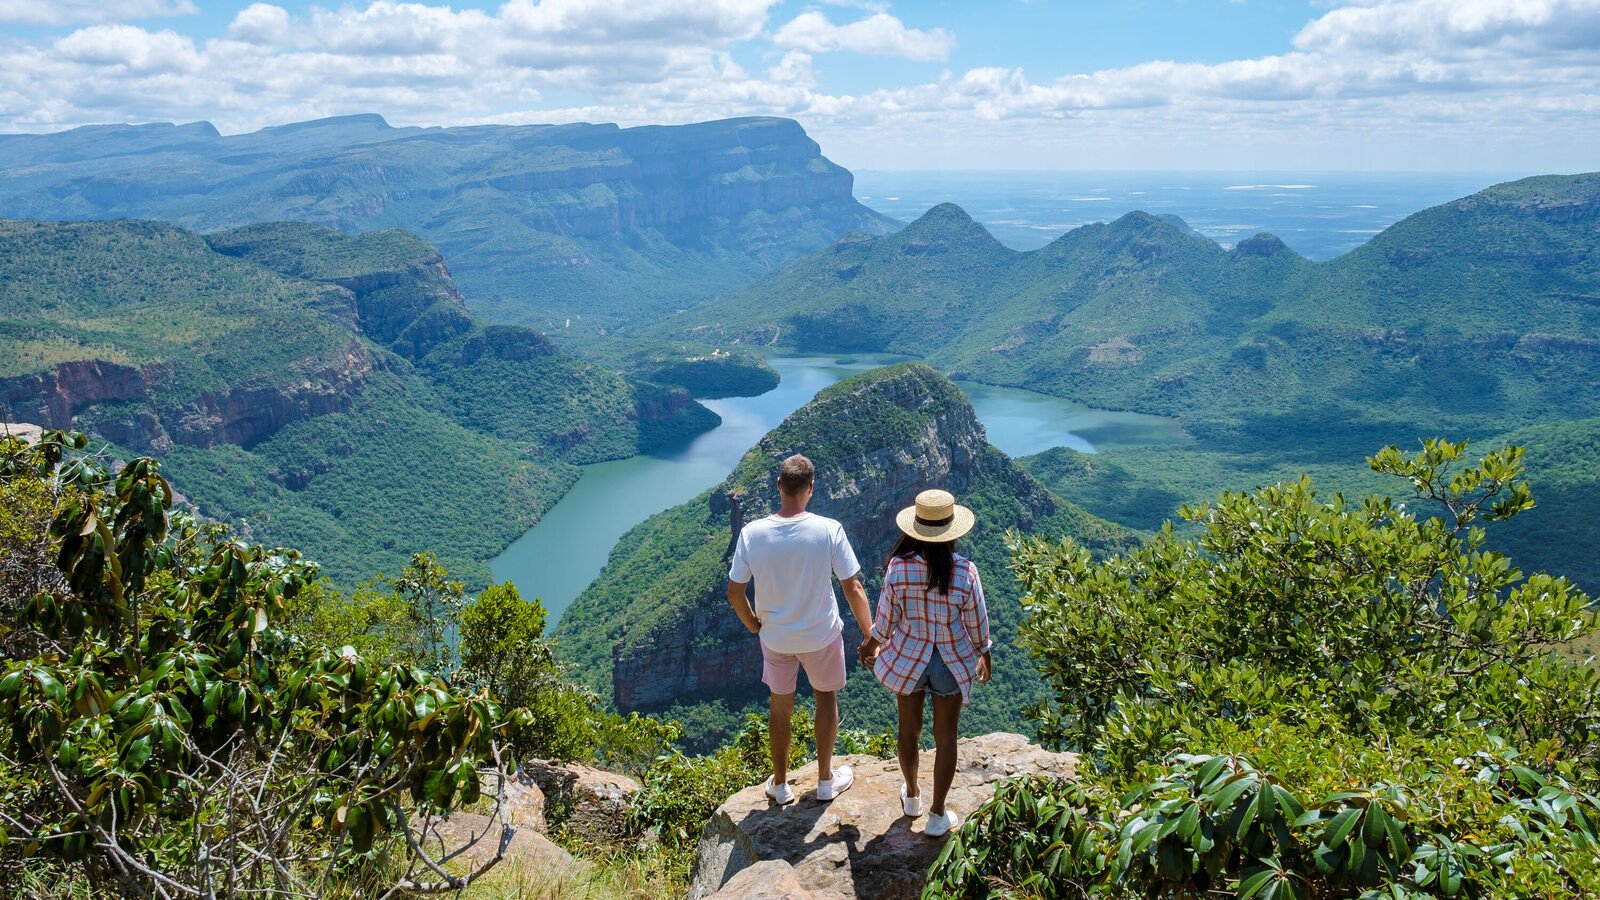 Blyd River Canyon - Rondreis Zuid-Afrika